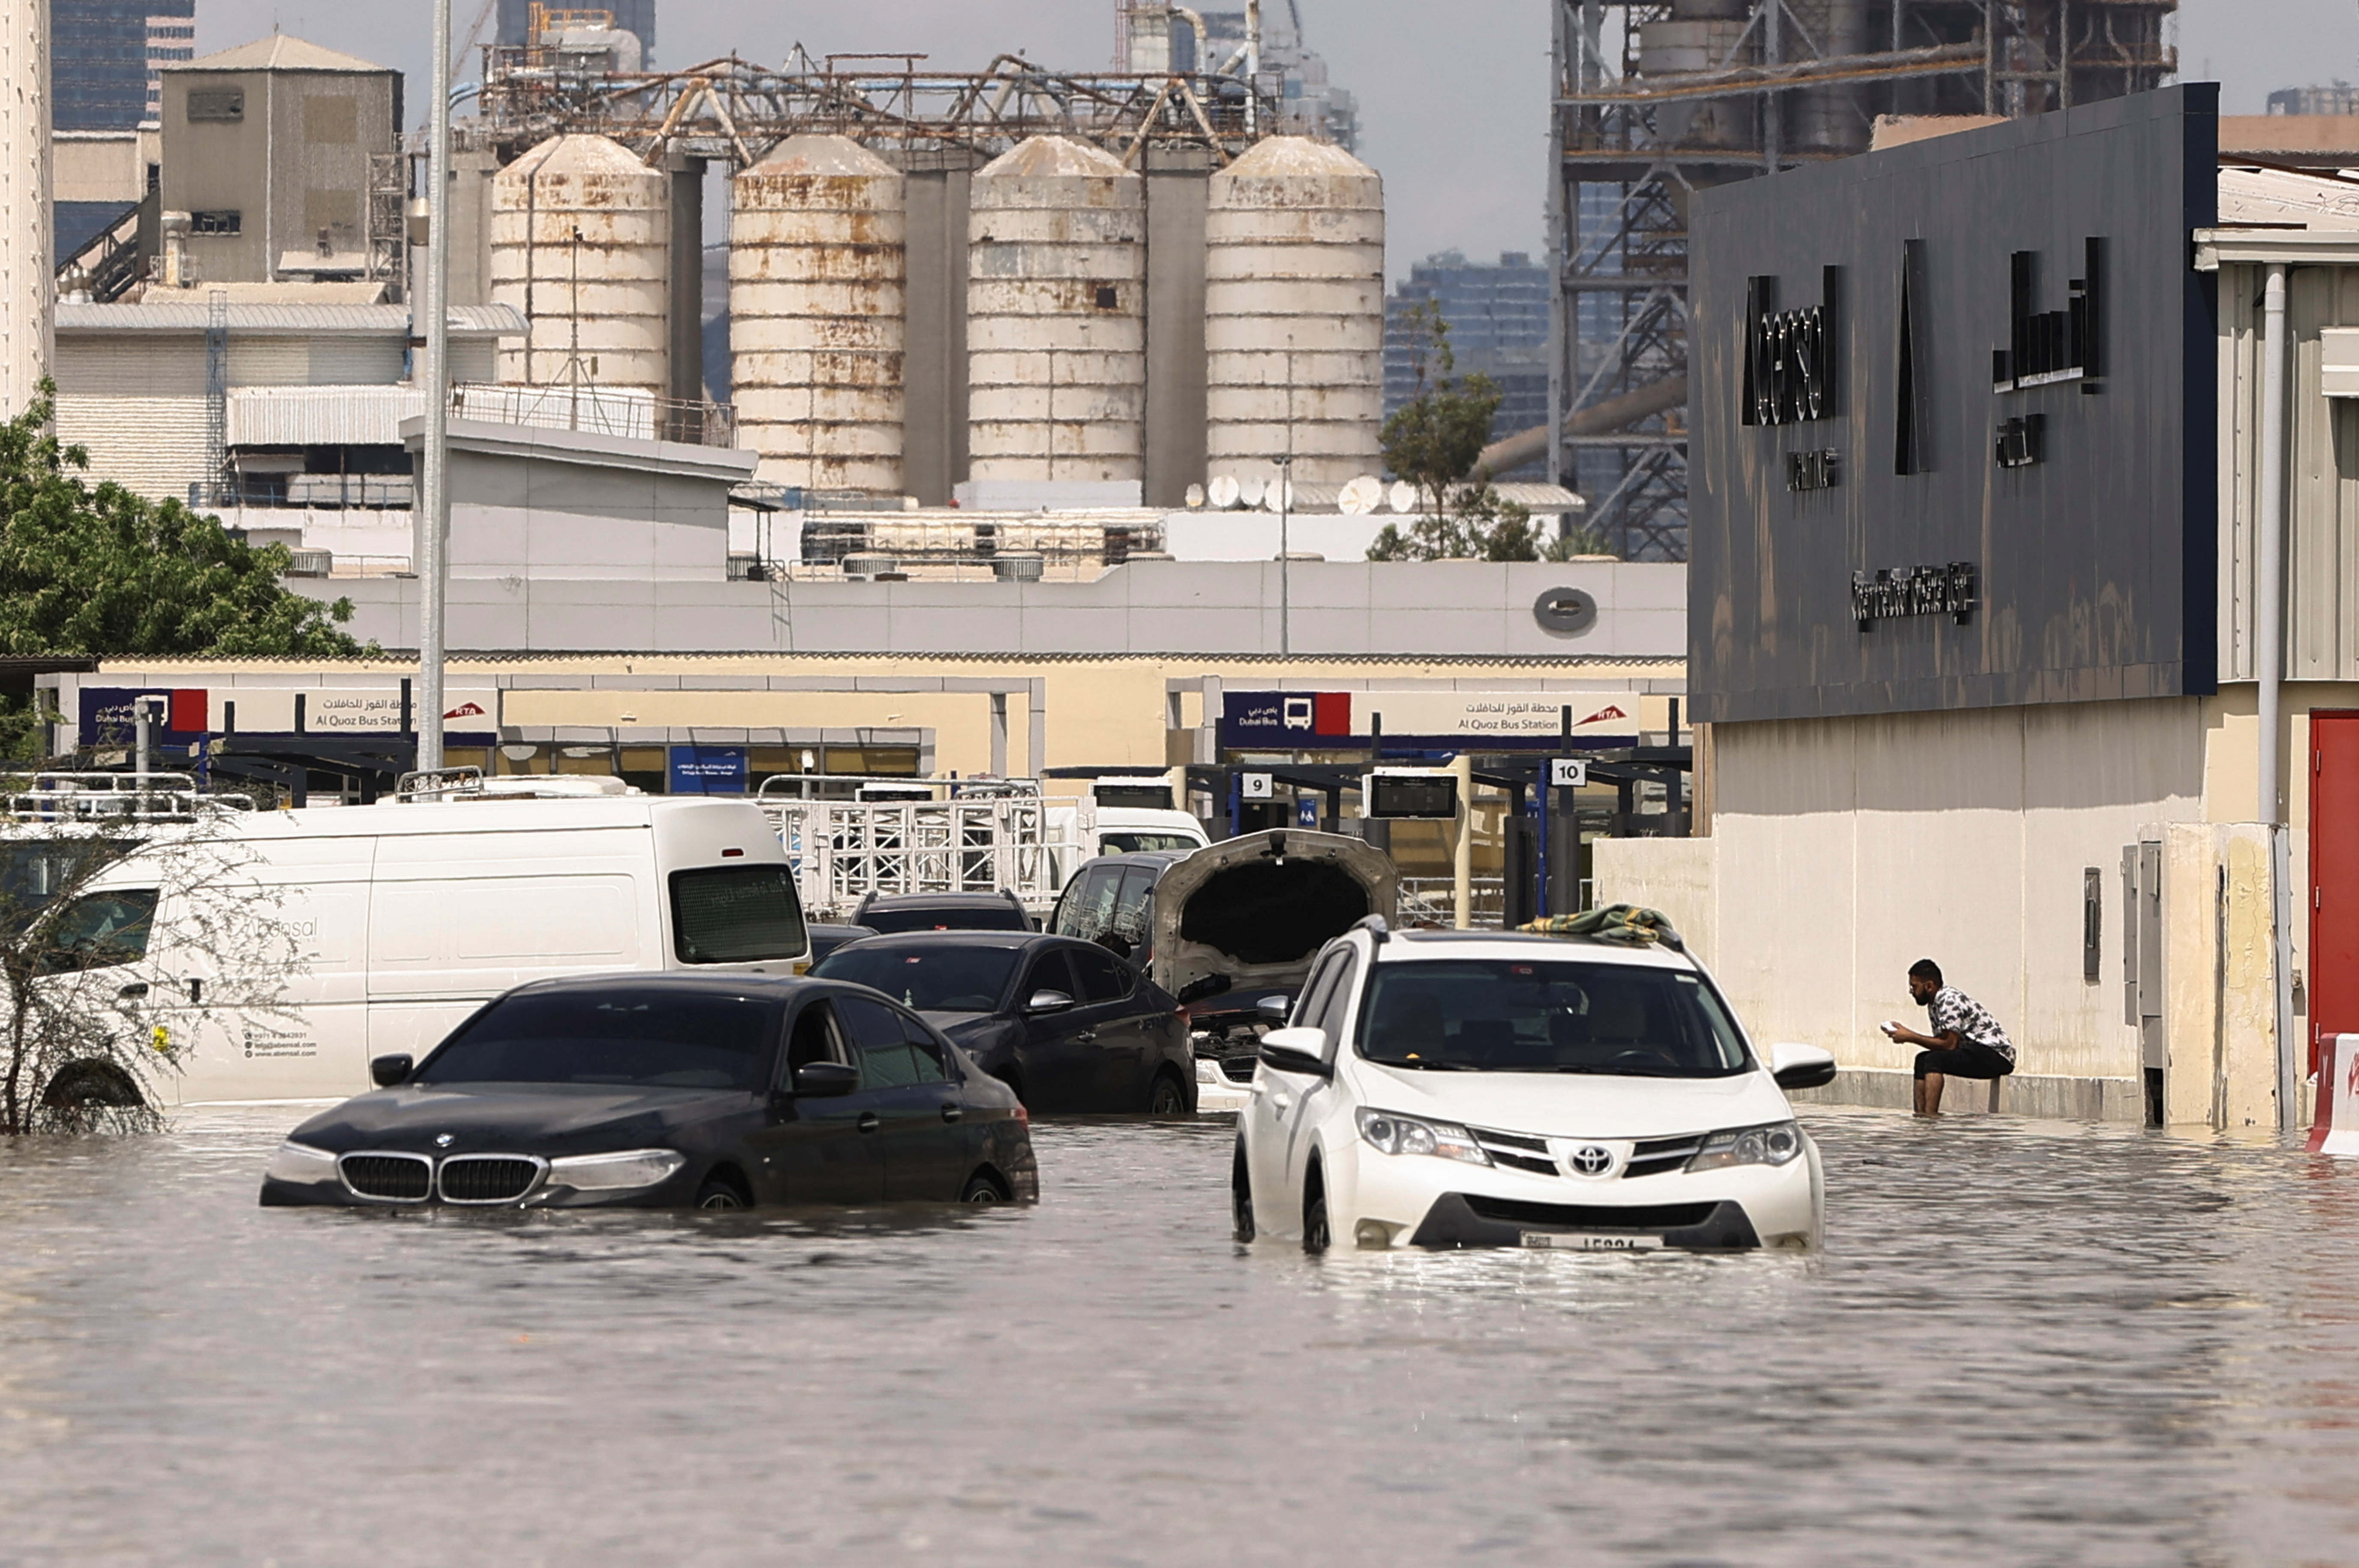 Atermath follwoing floods caused by heavy rains in Dubai